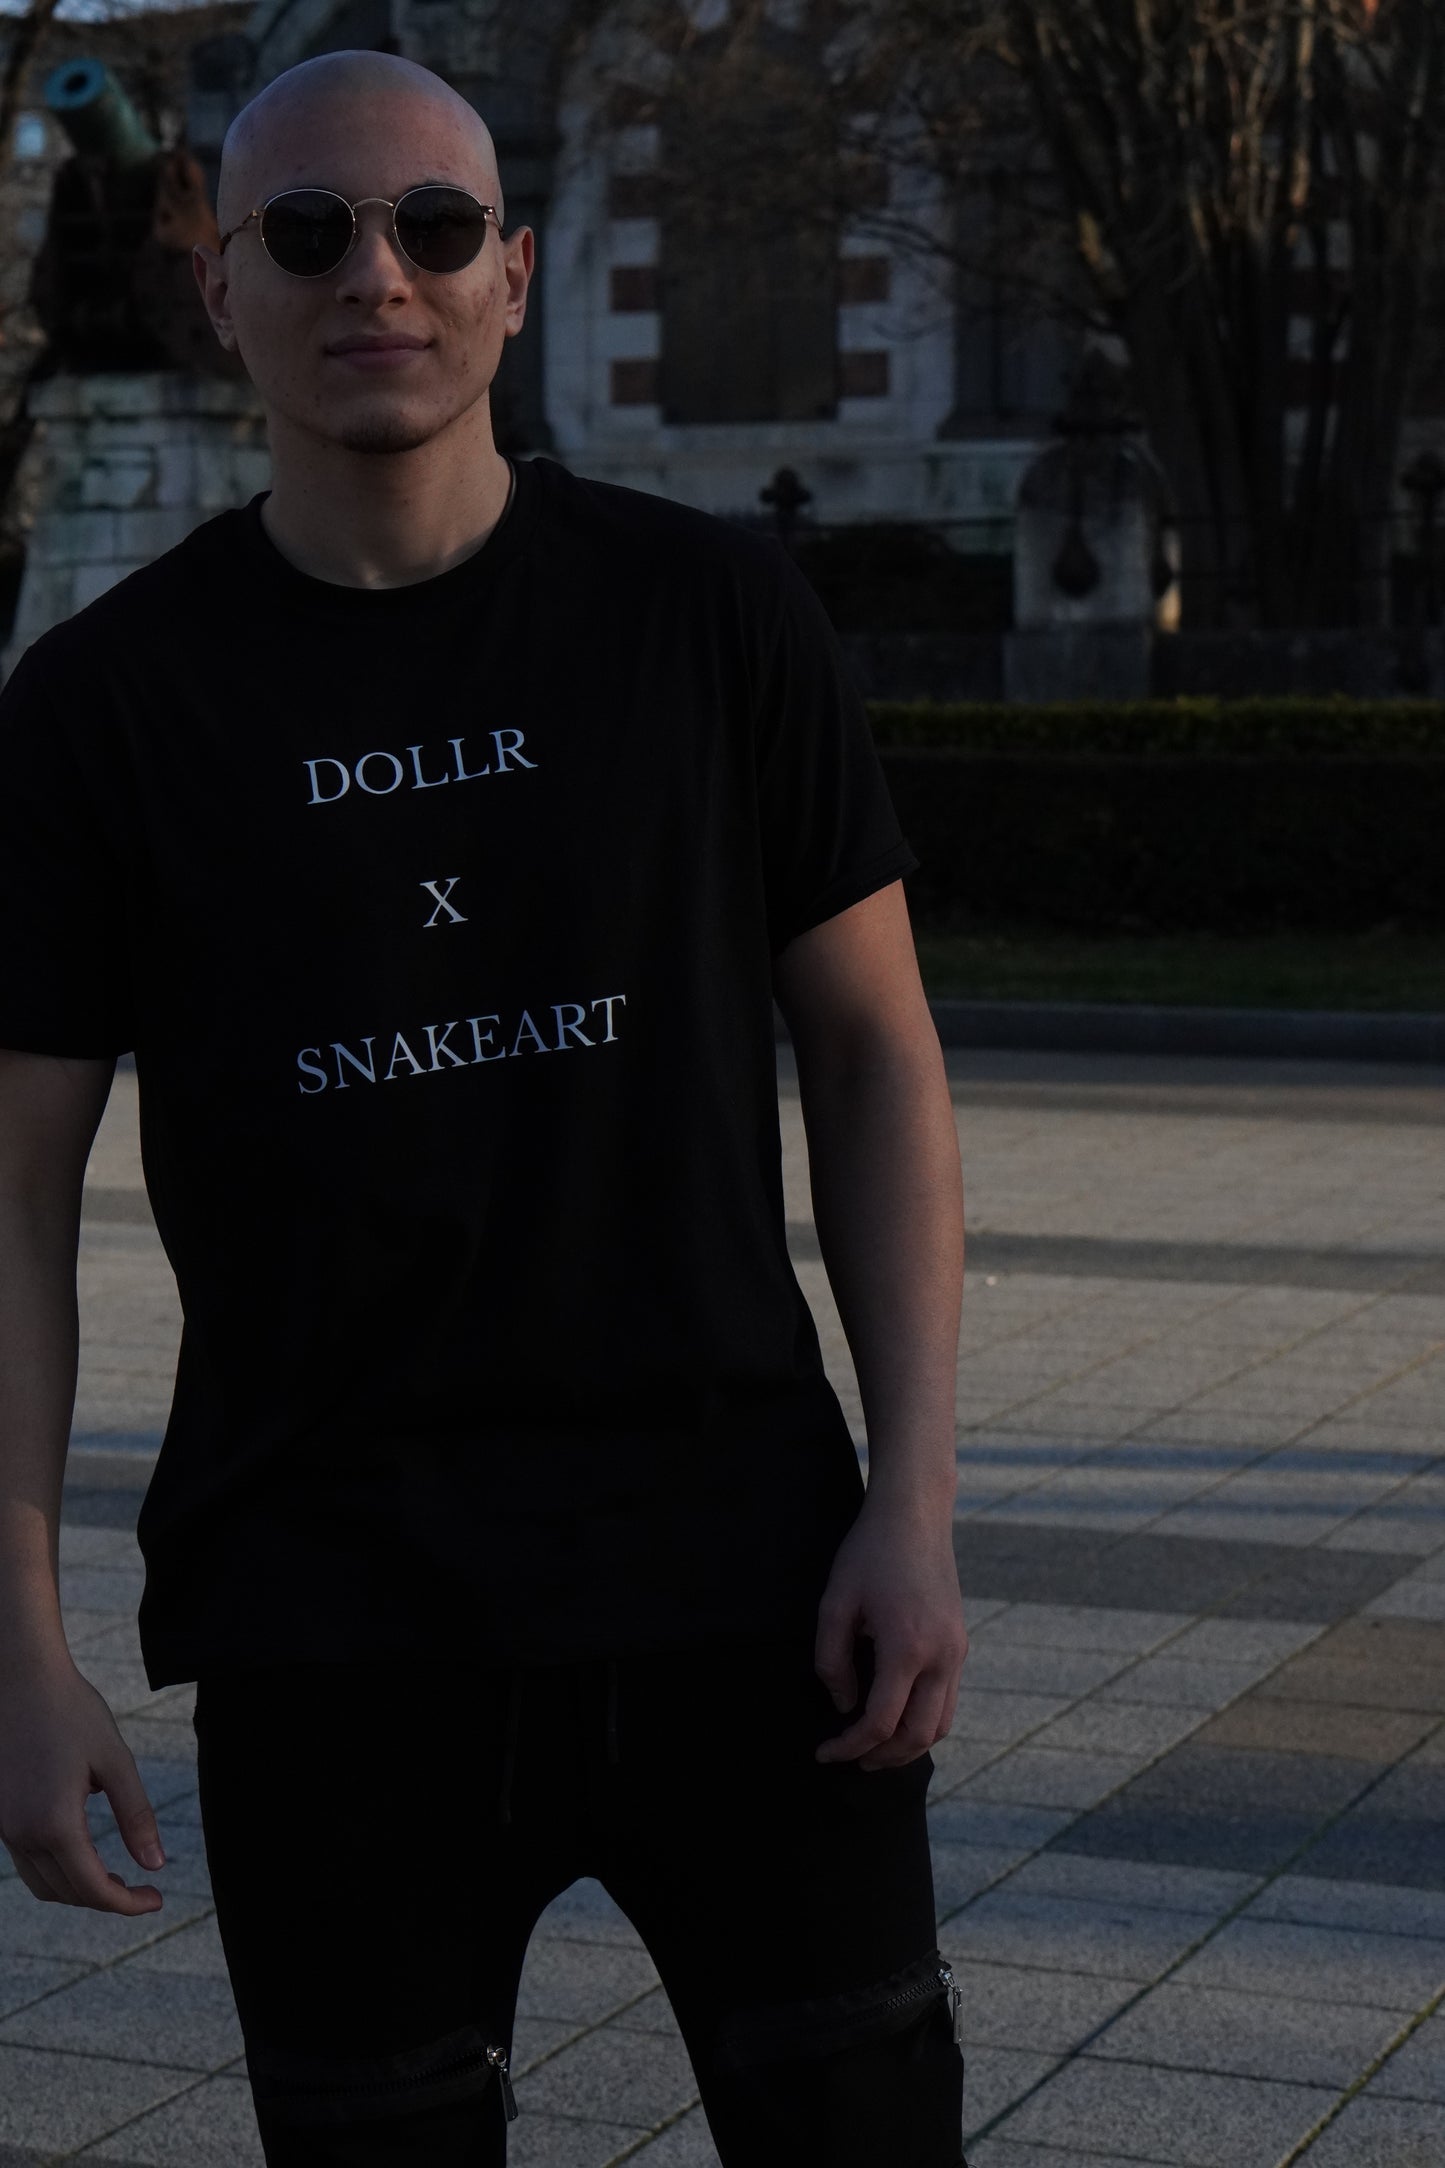 “ DOLLR X SNAKEART “ Black Shirt